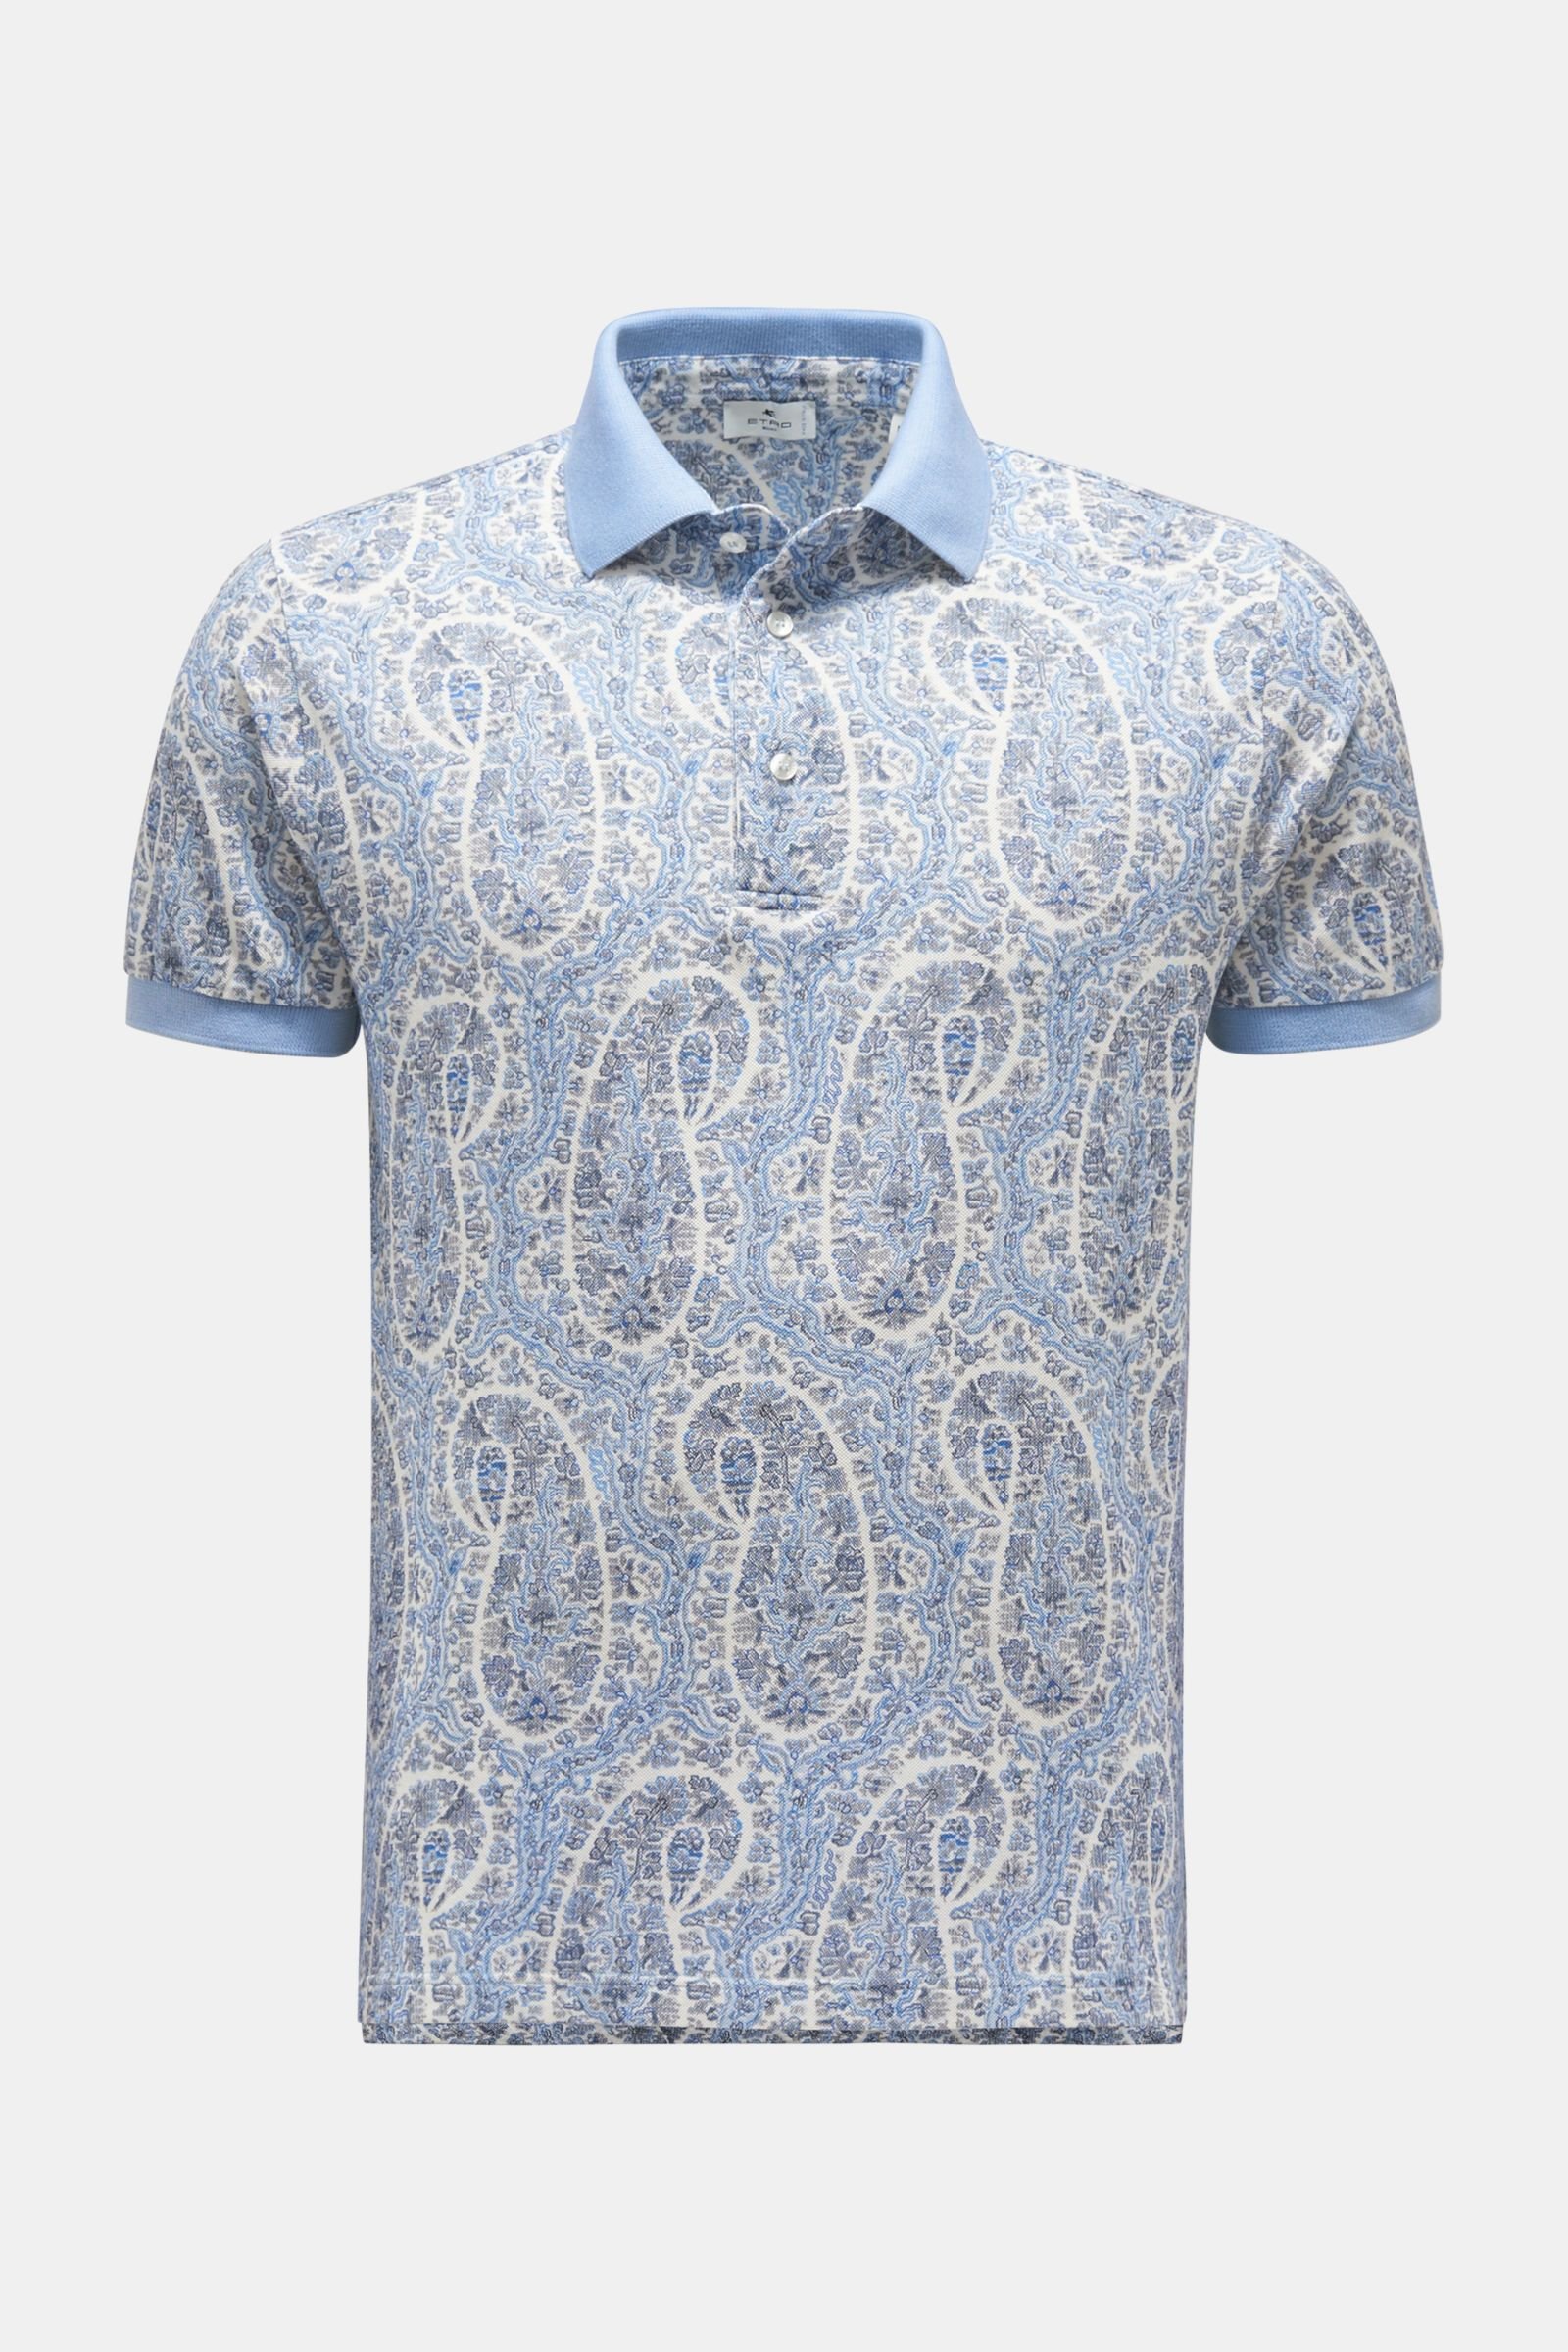 Polo shirt light blue/white patterned